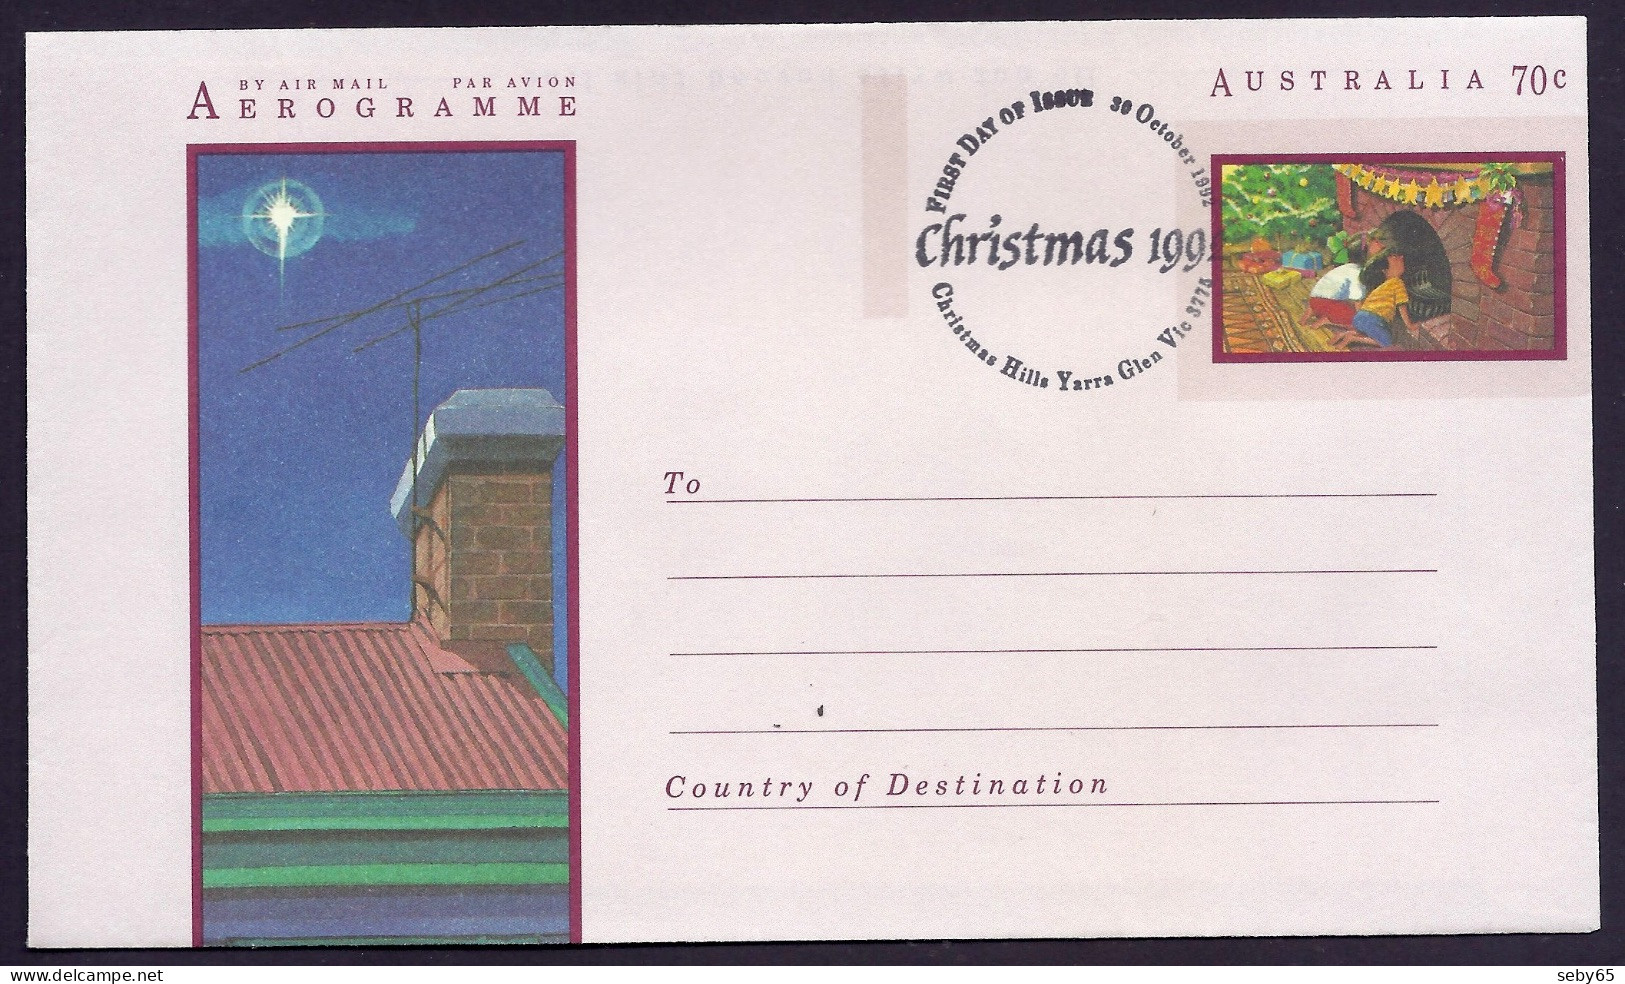 Australia 1992 Aerogramme - Christmas, Noel, Natale, Nativity, 70c - FDC Postmark - Aerograms